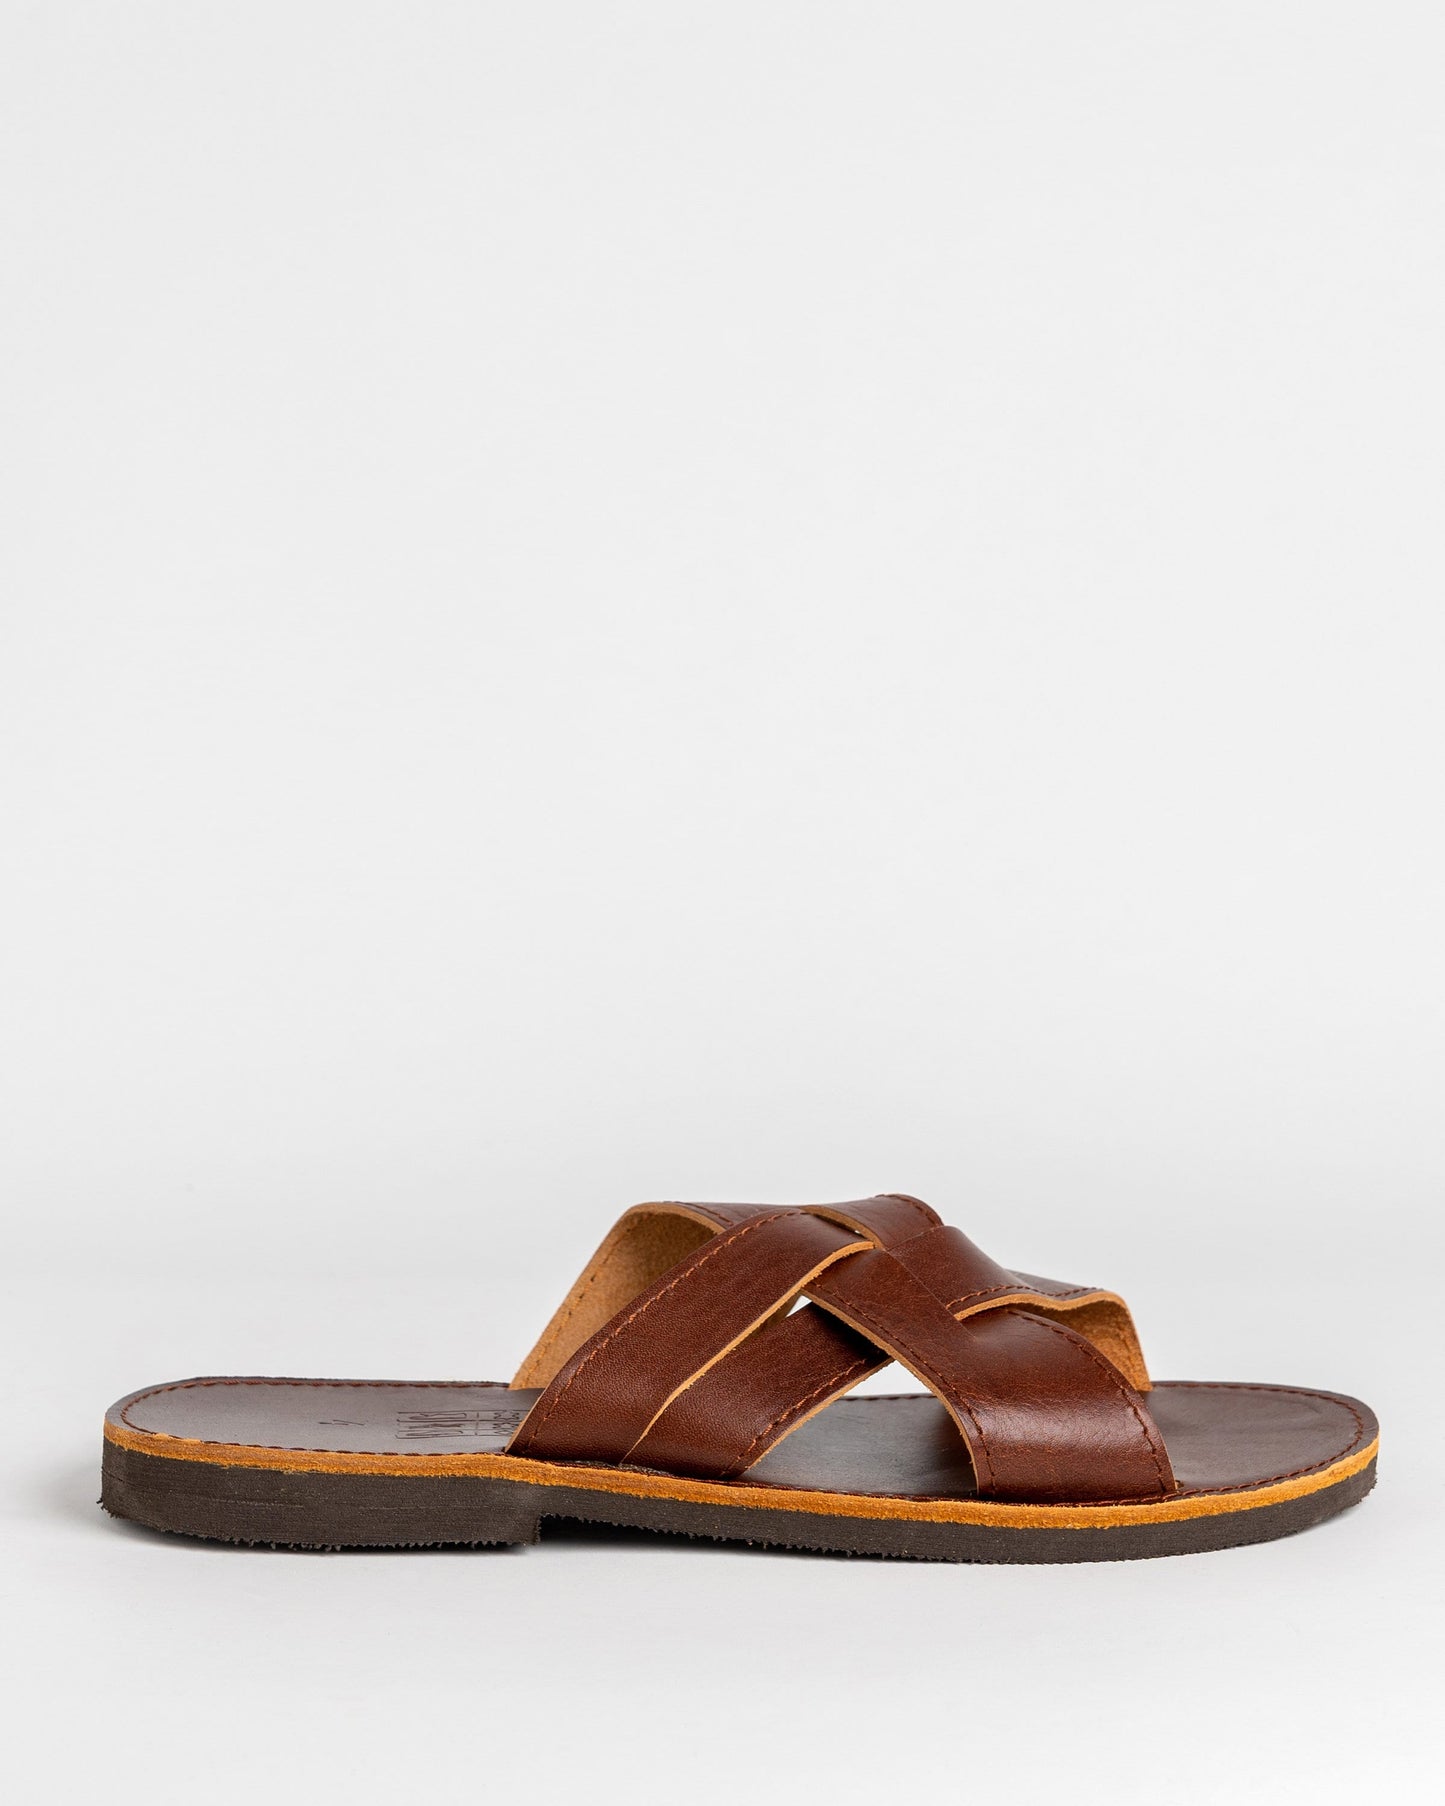 Greek leather sandals mens, Comfort leather sandals natural, Leather slide flat sandals, Sandales grecques